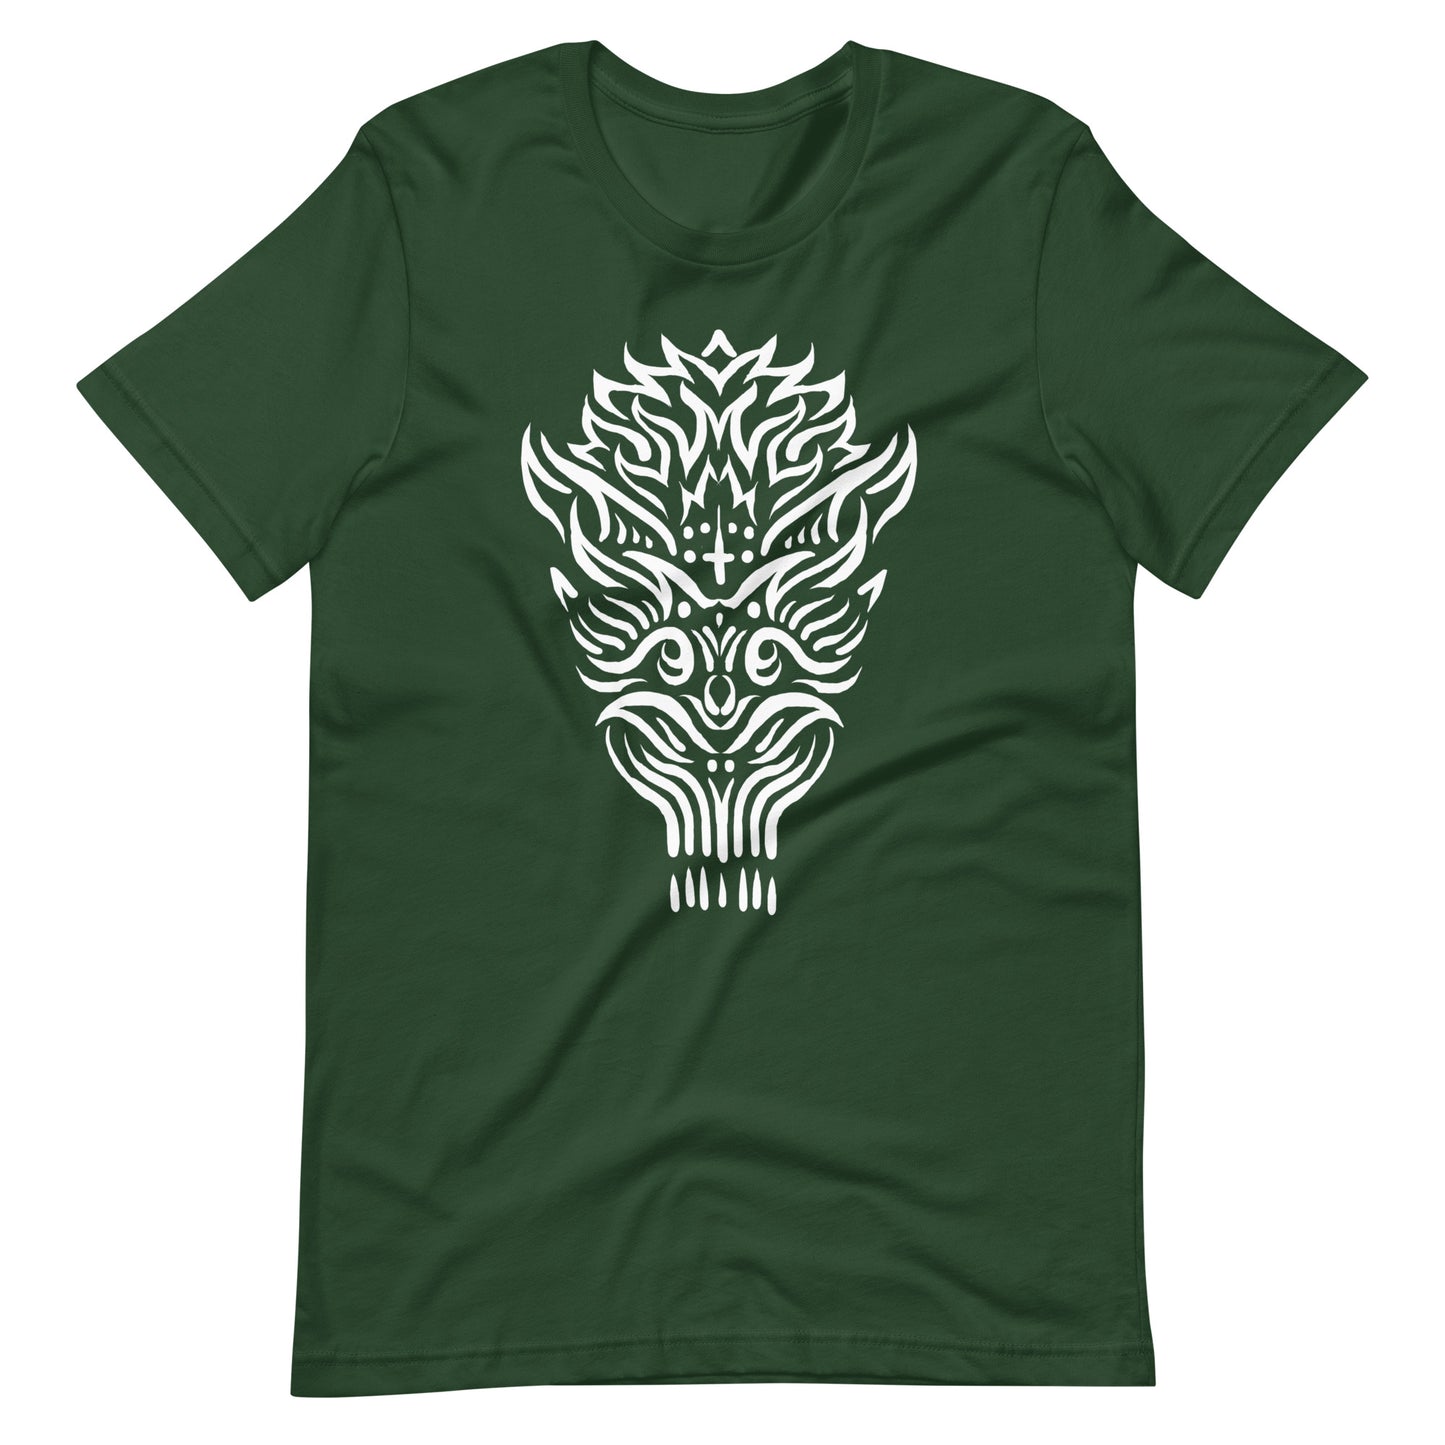 The Oldest Devil - Men's t-shirt - Forest Front